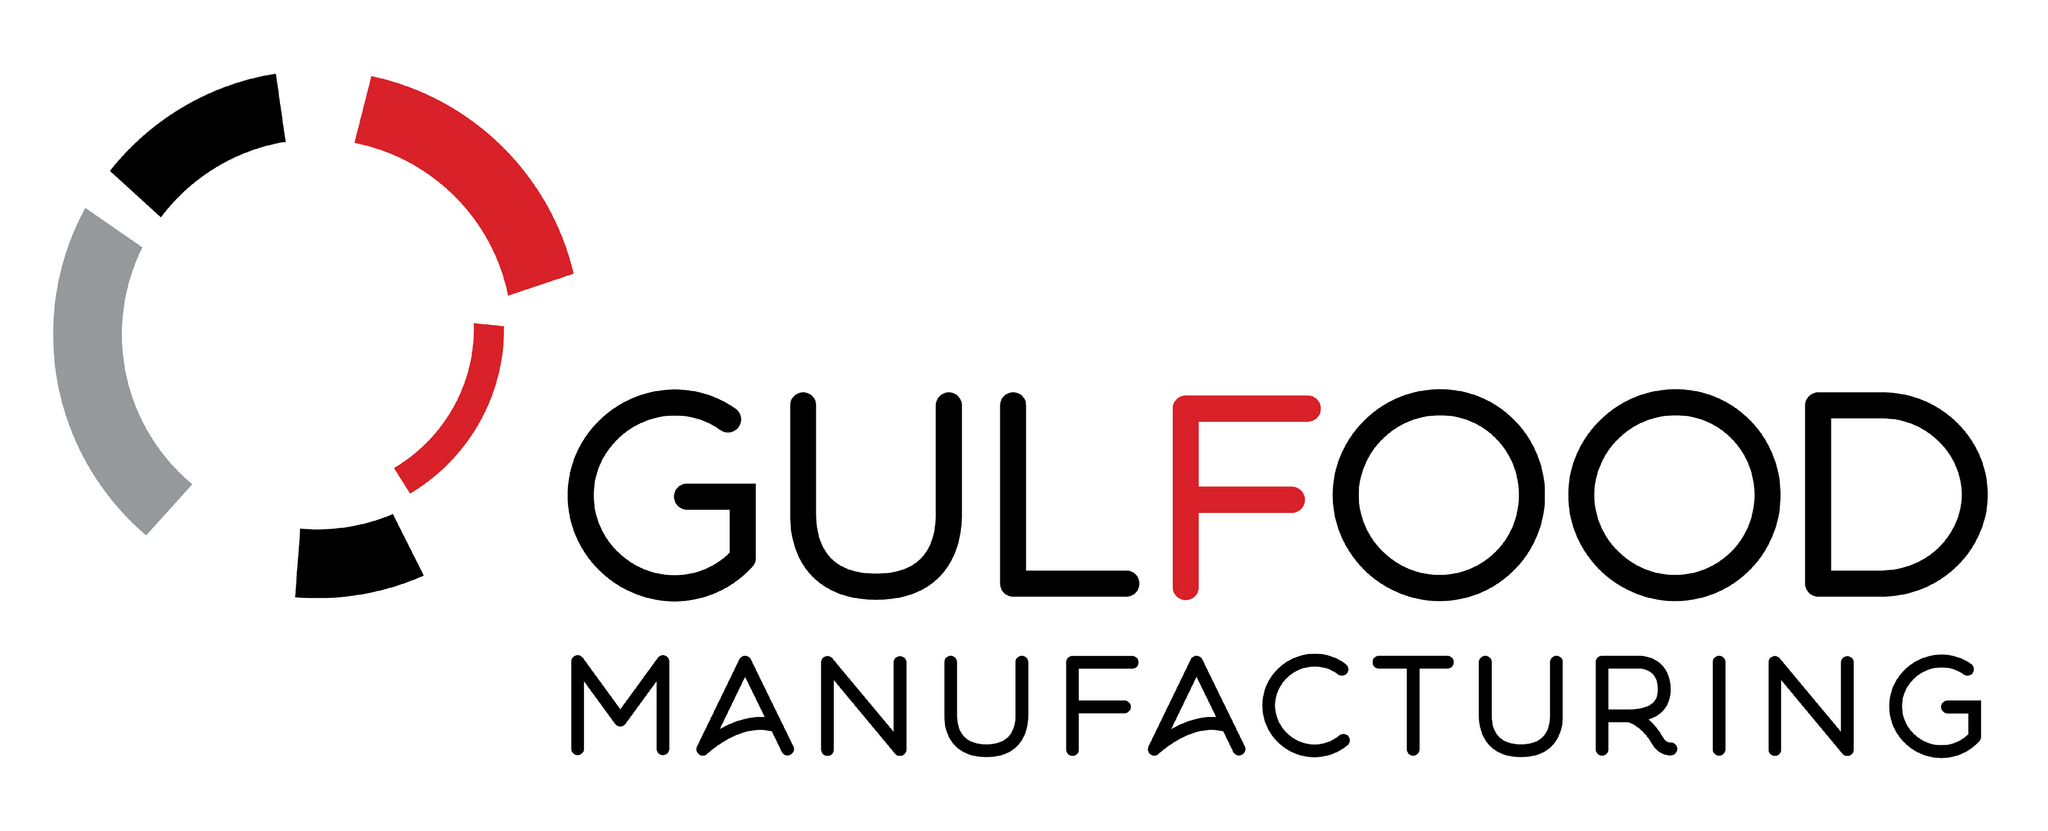  GulFood Manufacturing 2019